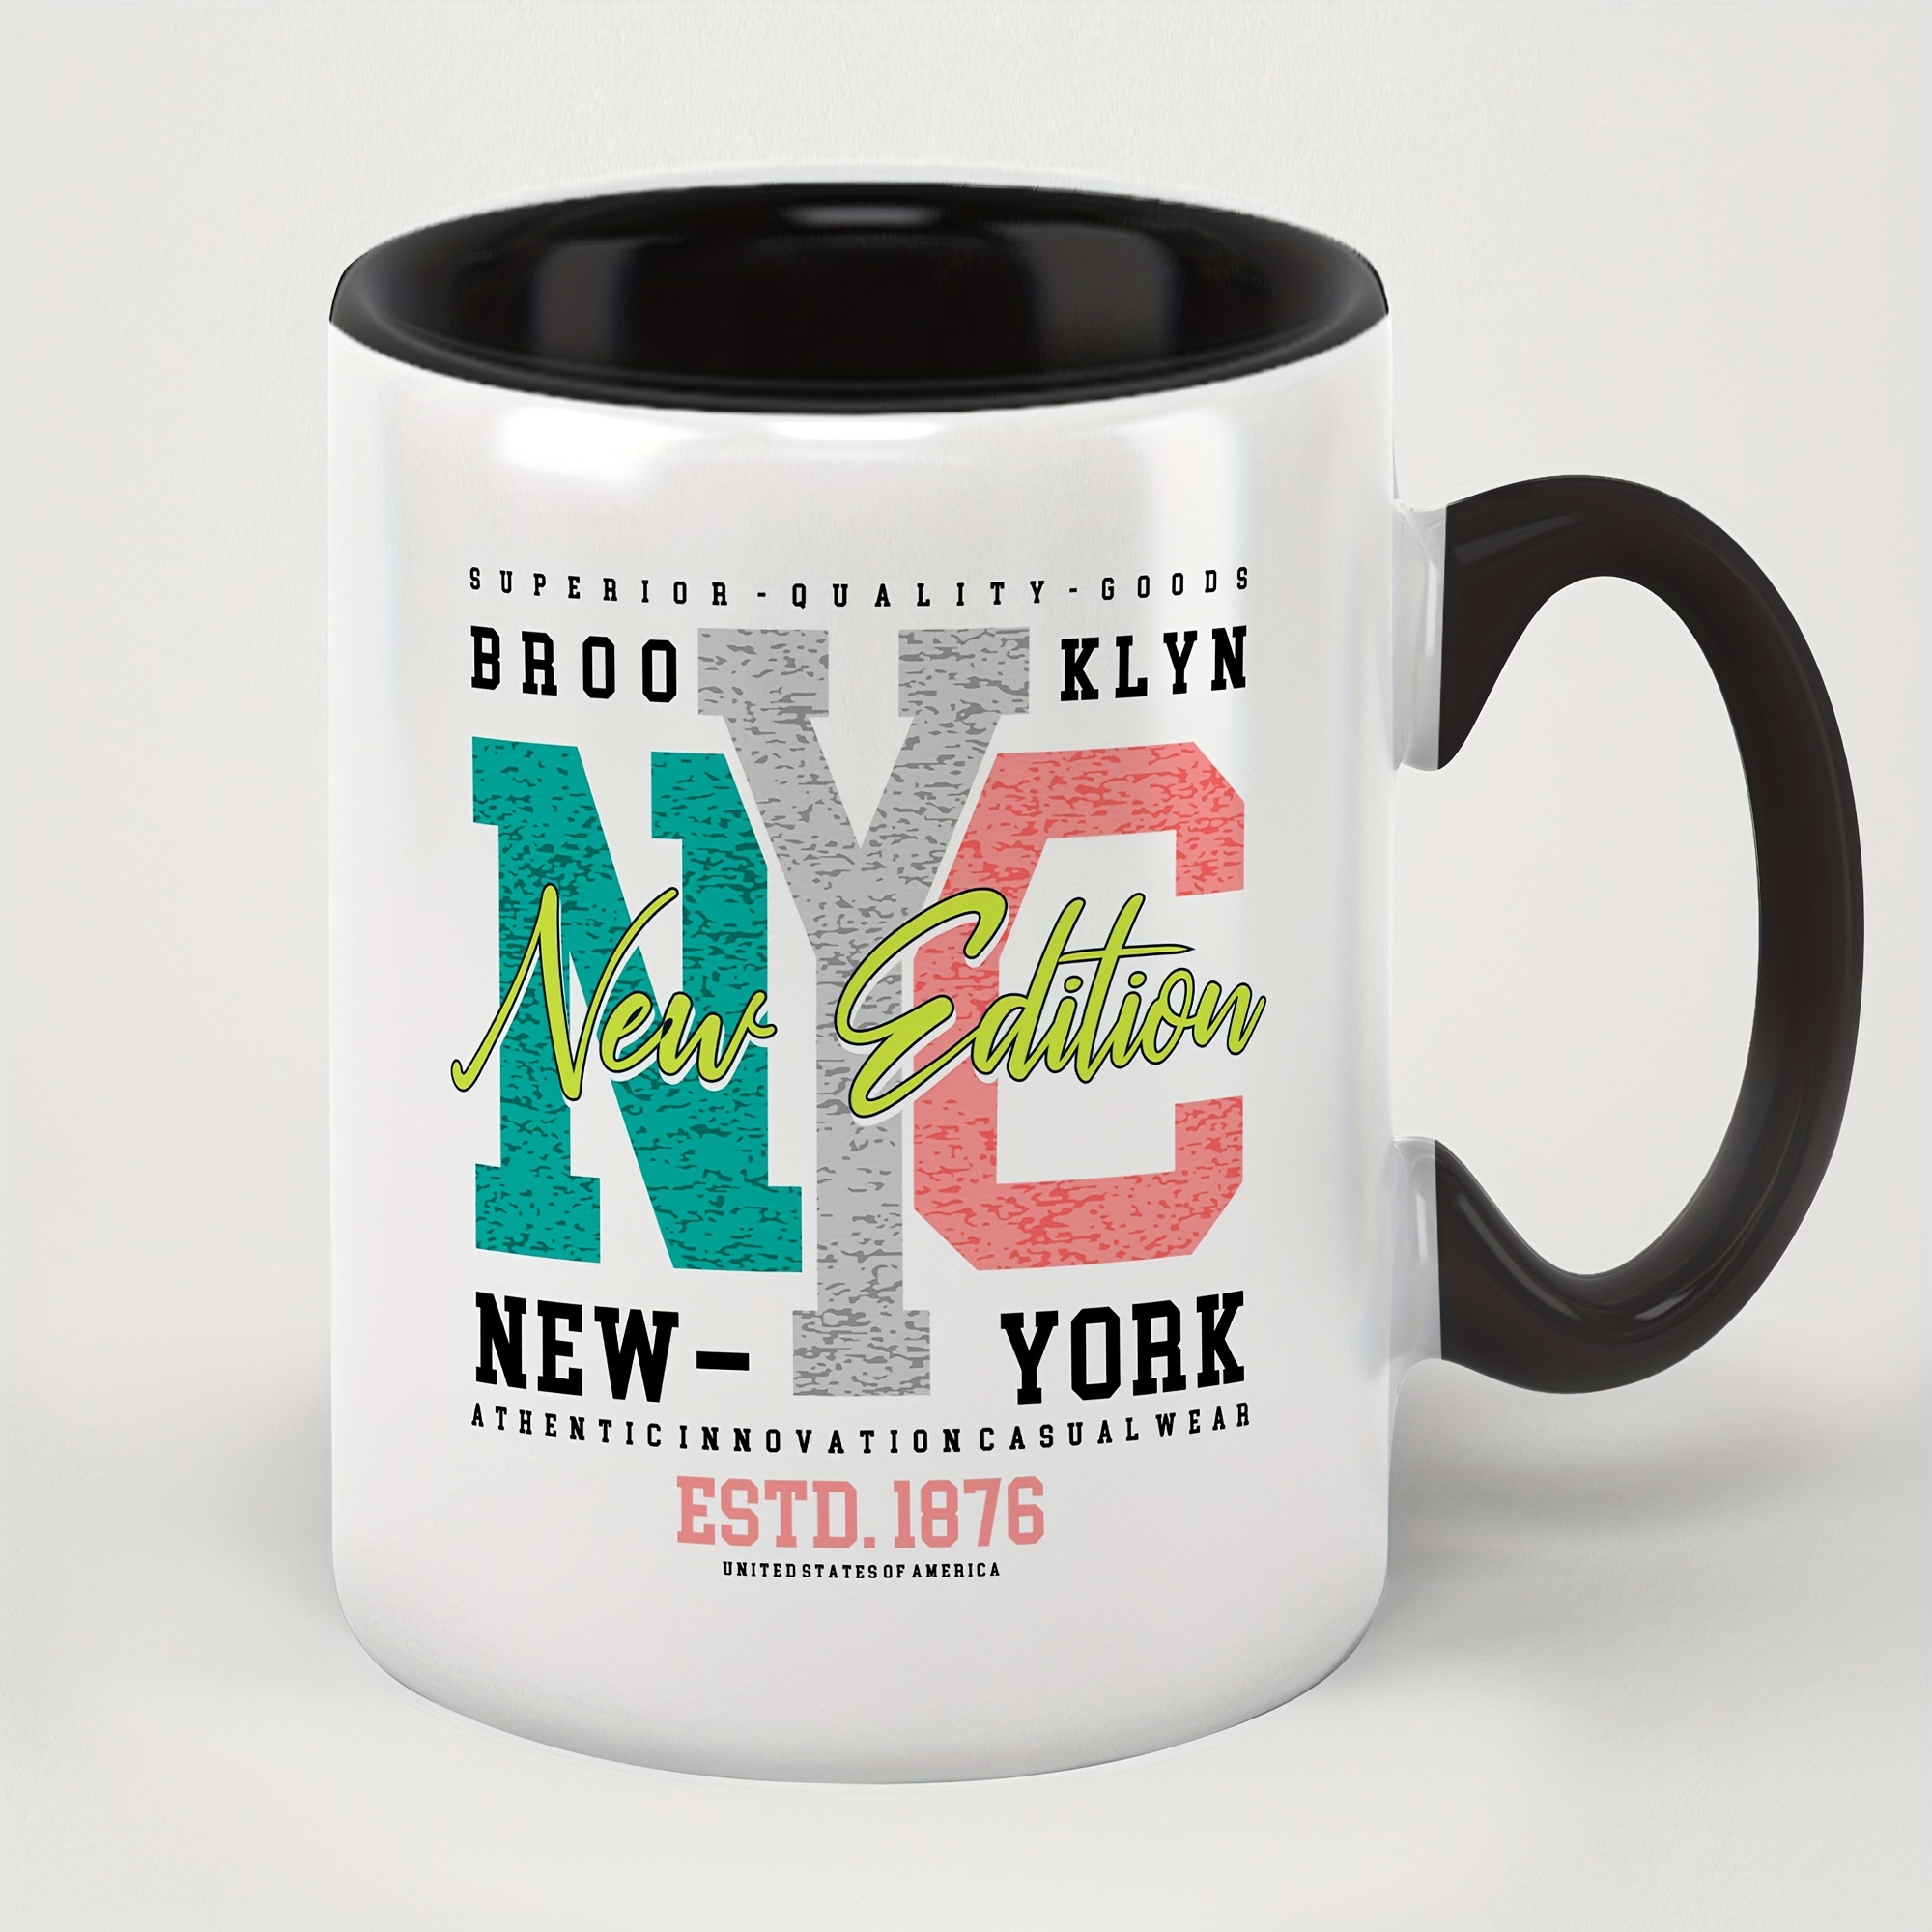 

1pc, Funny Coffee Mug. Tea Cup/water Cup. For Office/home Life/party Gift/wedding Gift/holiday Gift, Perfect Birthday Gift, Hand Wash Only, Reusable Ceramic Coffee Mug, 11oz/330ml, New York Mug